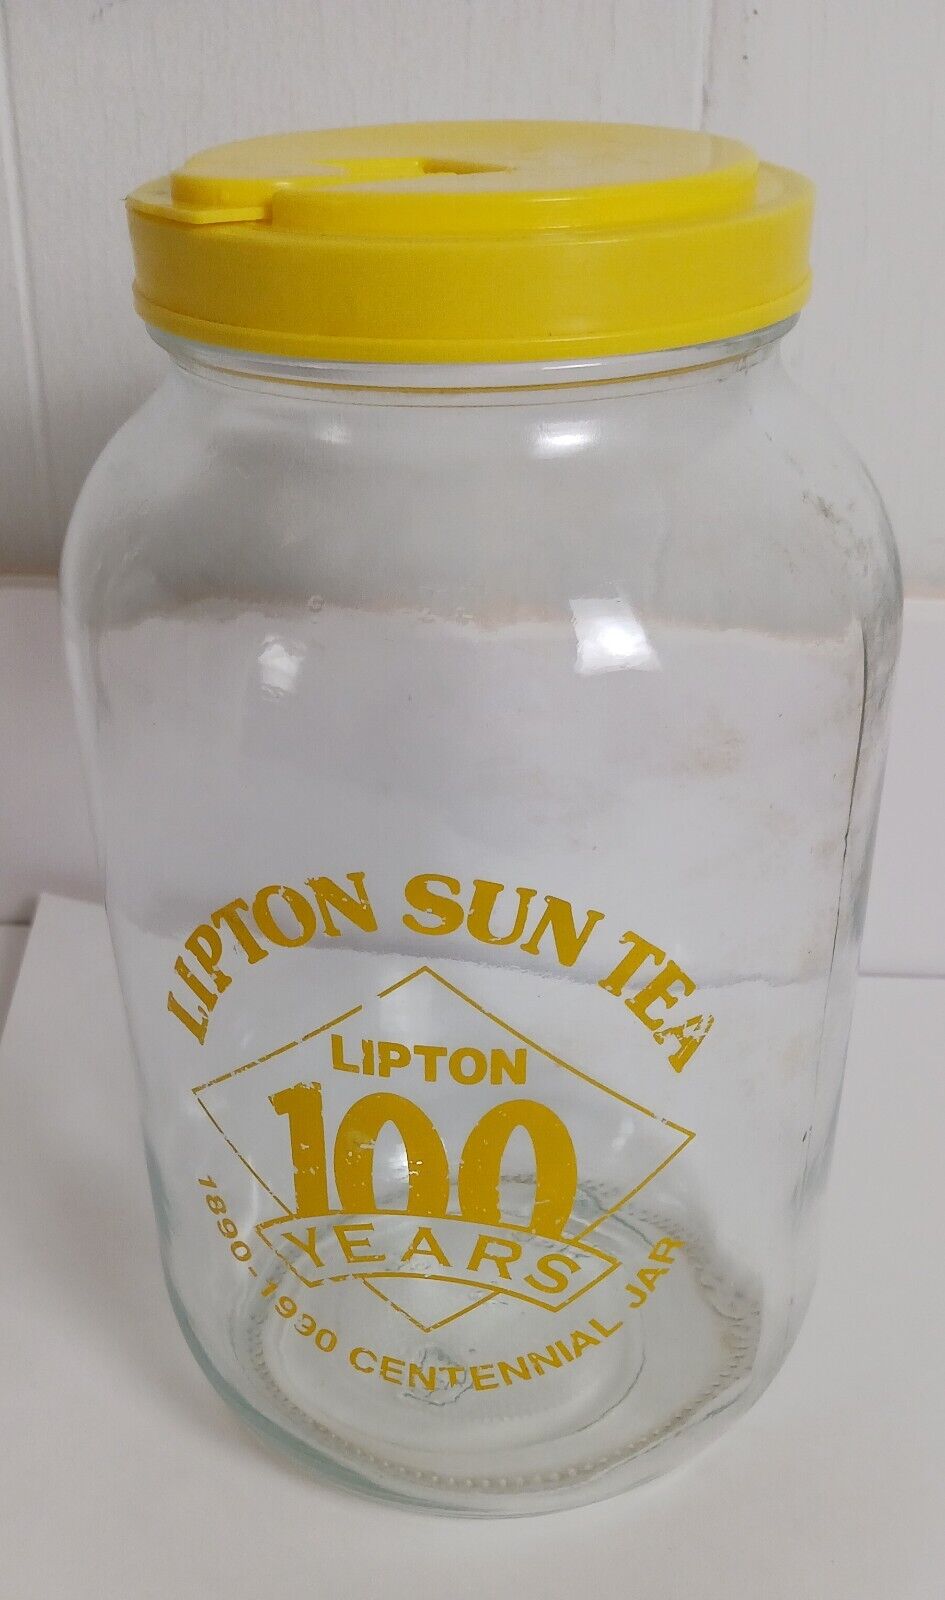 Vintage Lipton Sun Tea Glass Container  100 Years Centennial  yellow Flip Lid